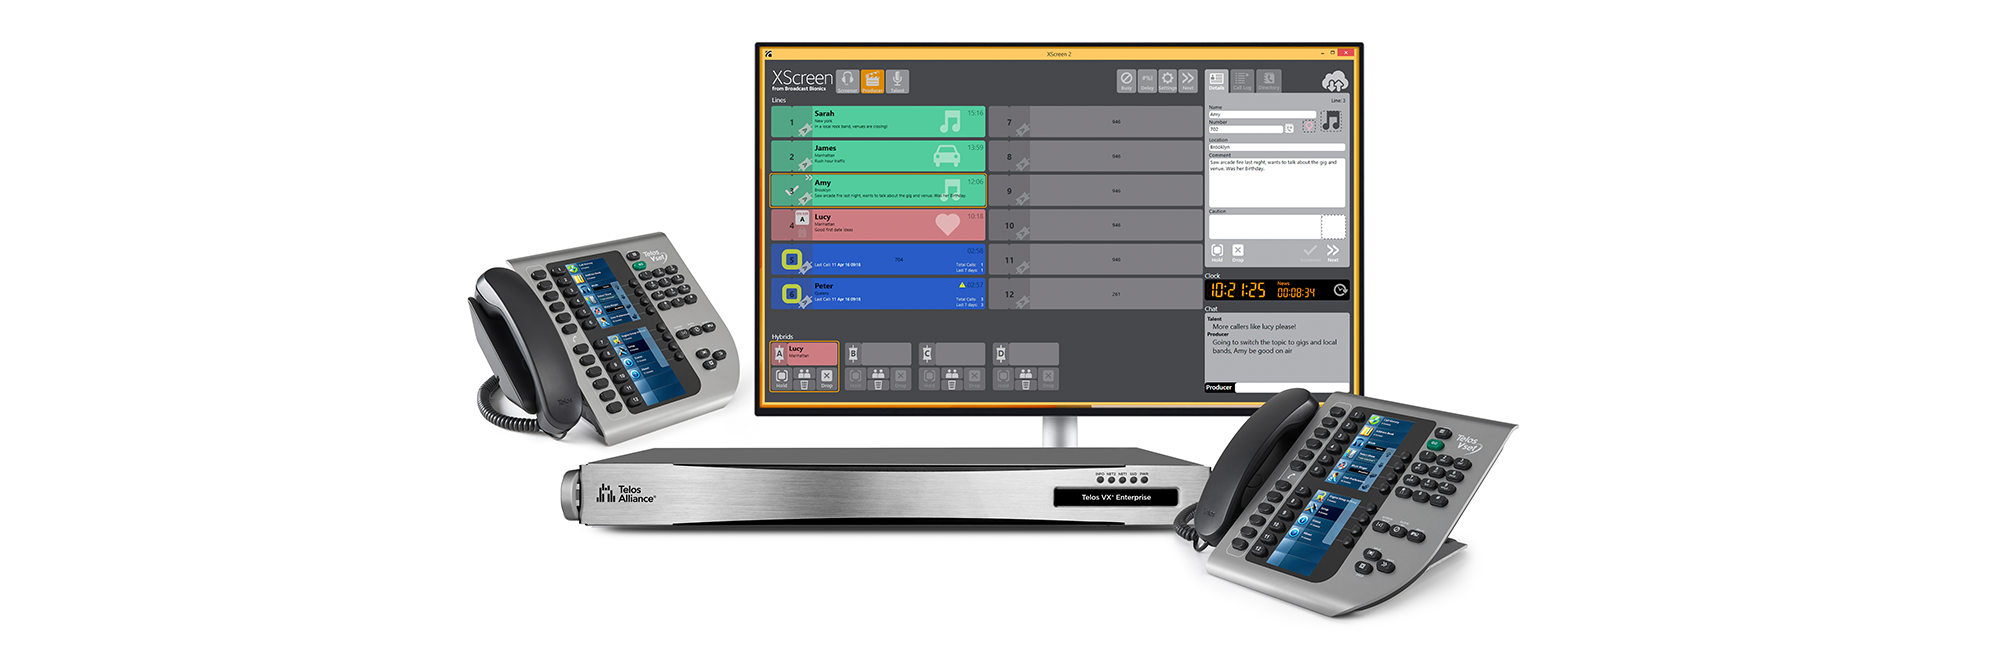 VX Enterprise Broadcast VoIP Phone System